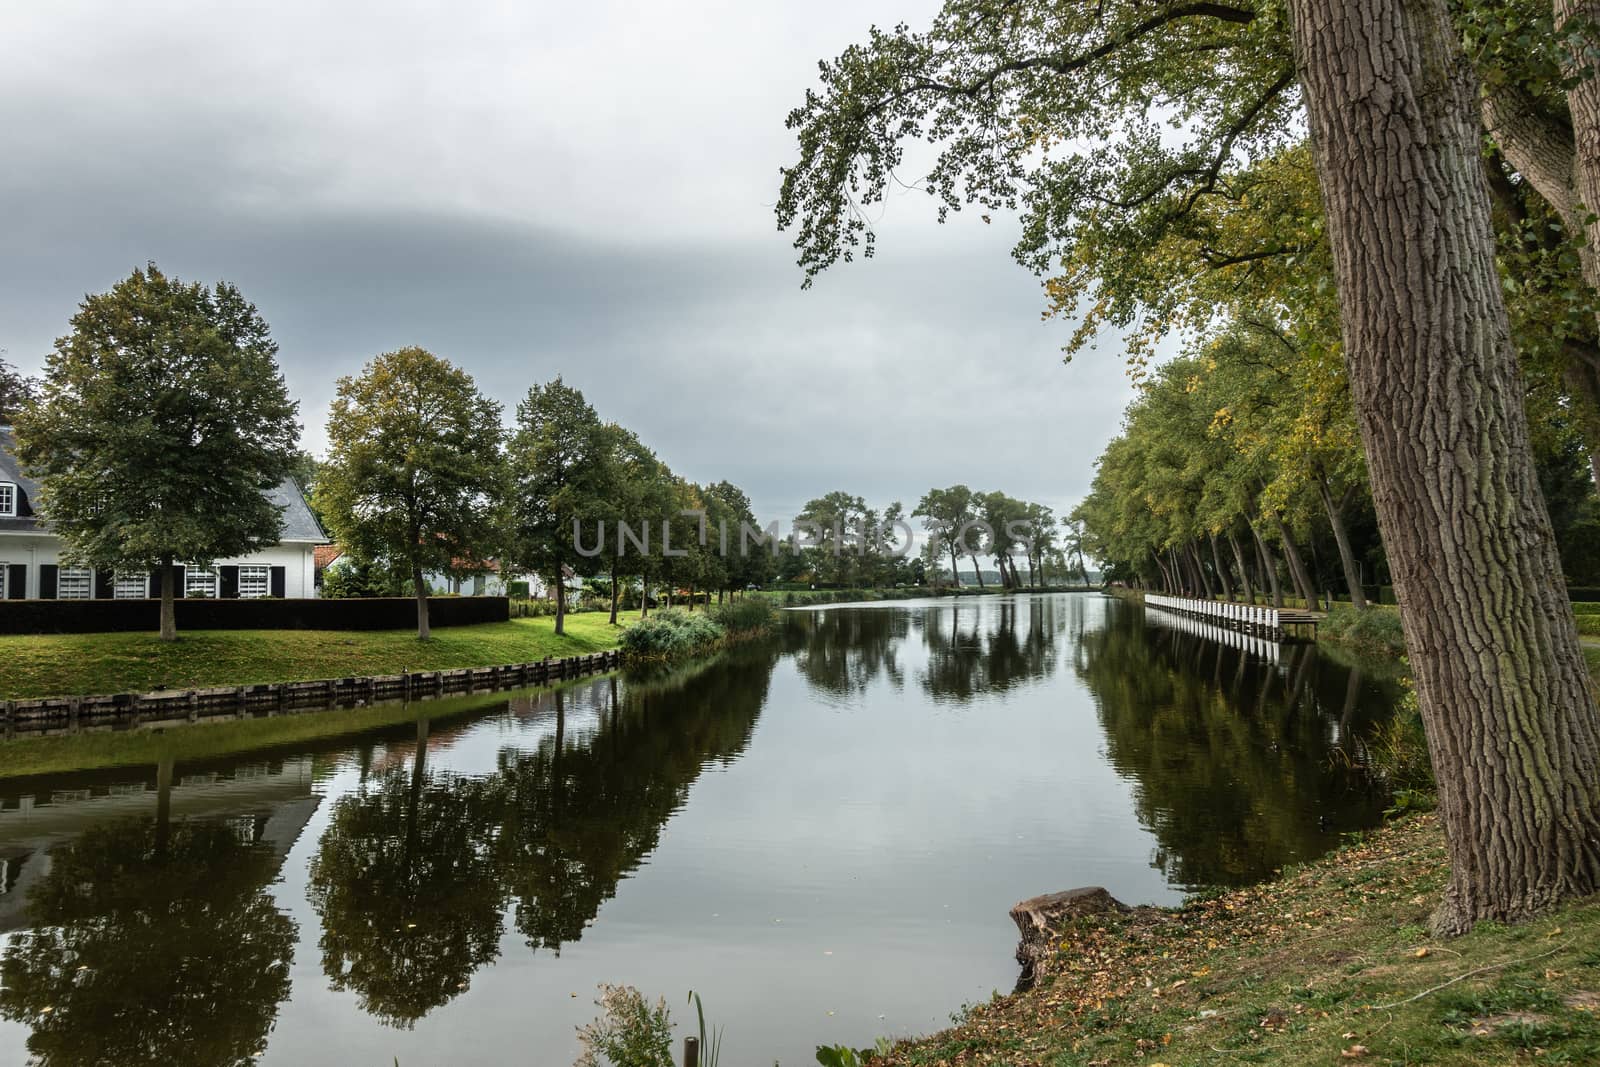 Canal Bruges-Sluis dead ends in Sluis, Netherlands. by Claudine